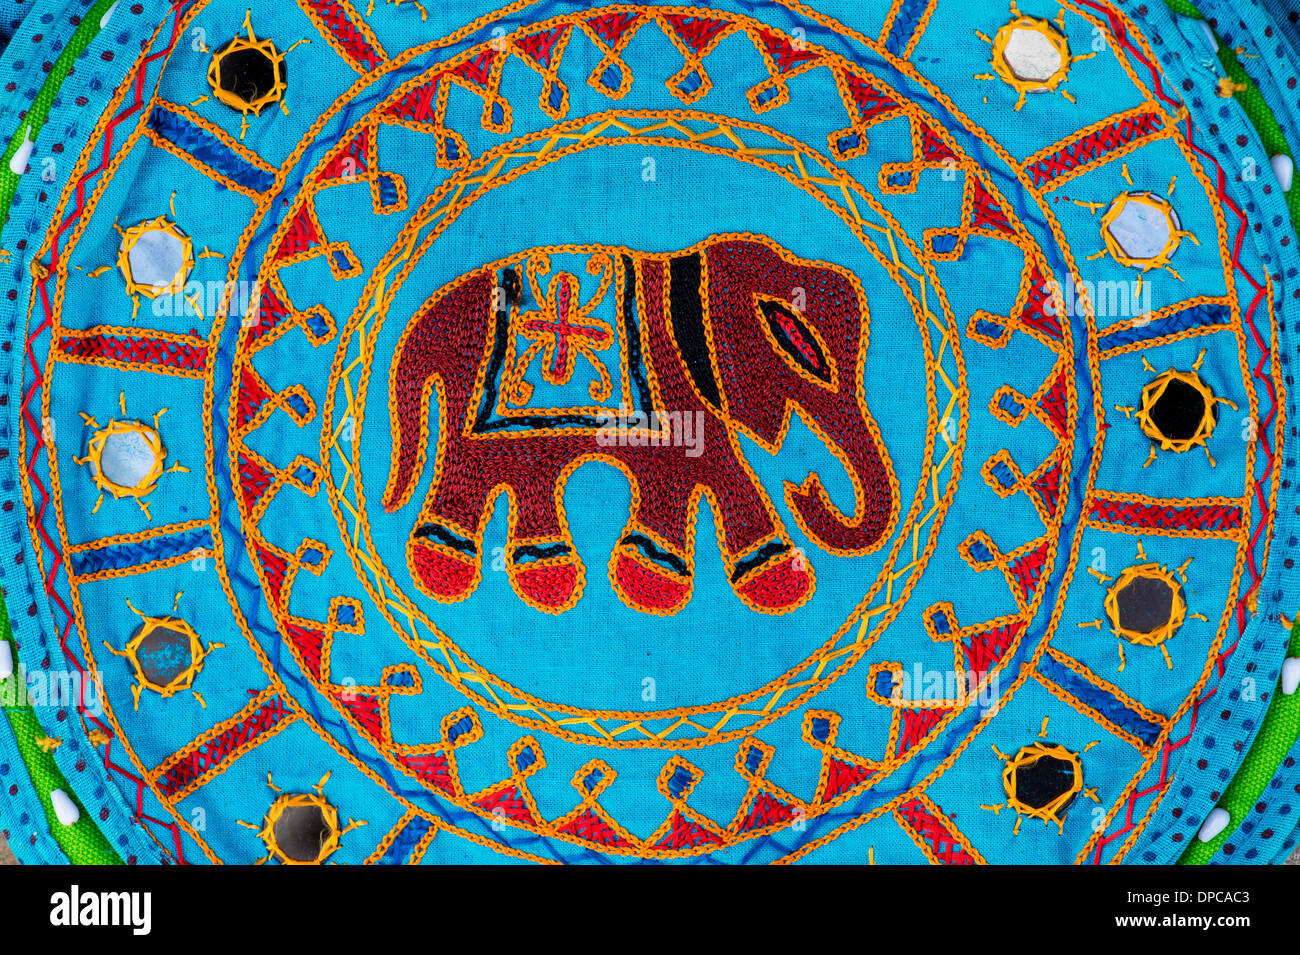 Indian handmade colourful fabric bag with elephant design Stock Photo